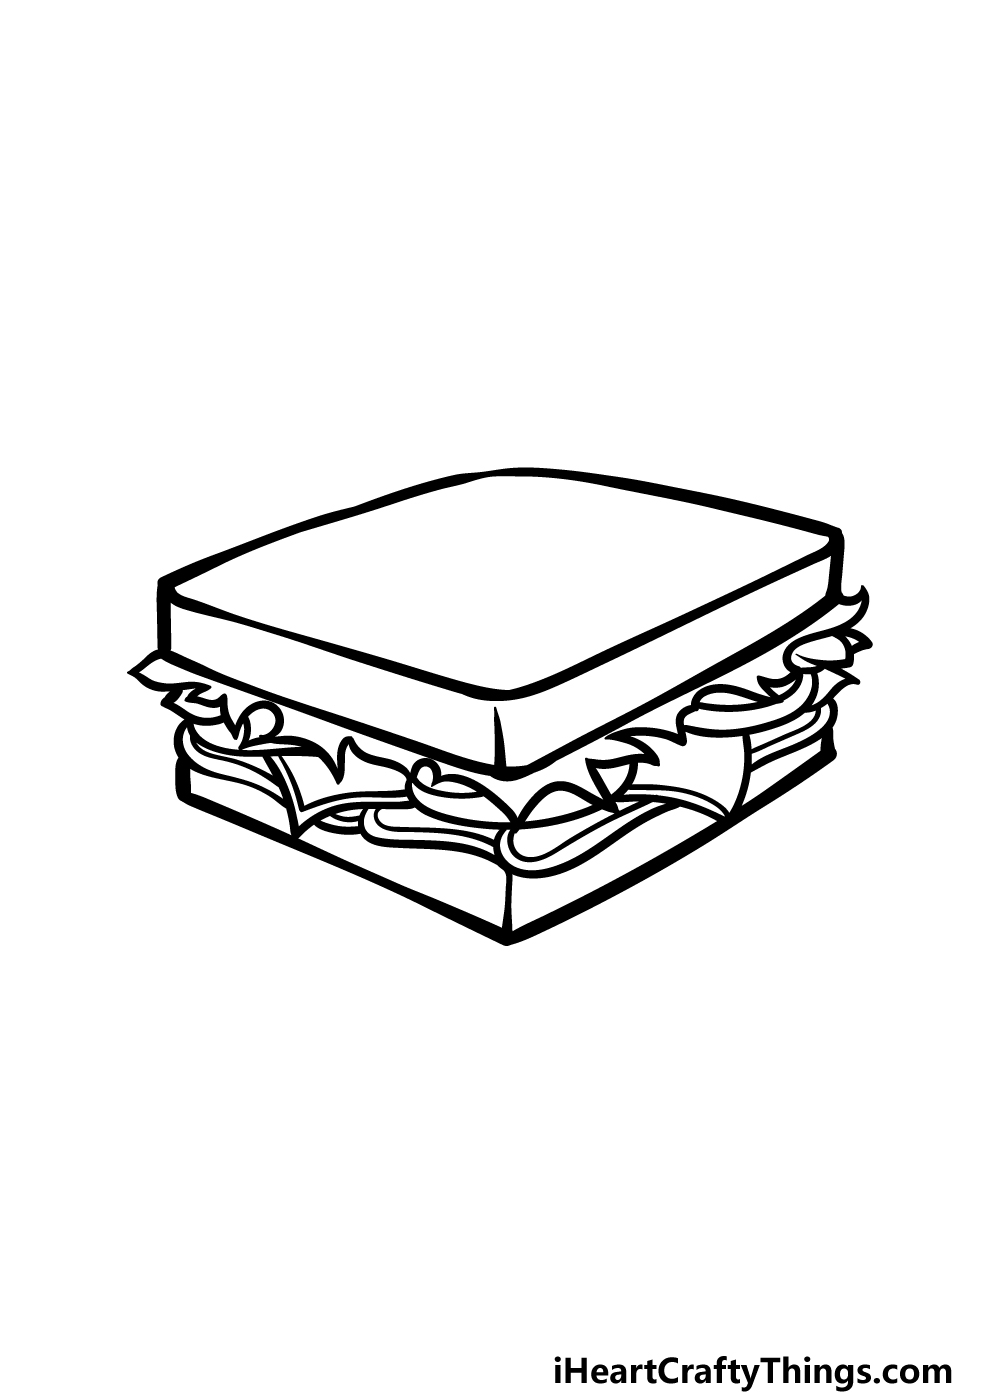 how to draw a Sandwich step 5